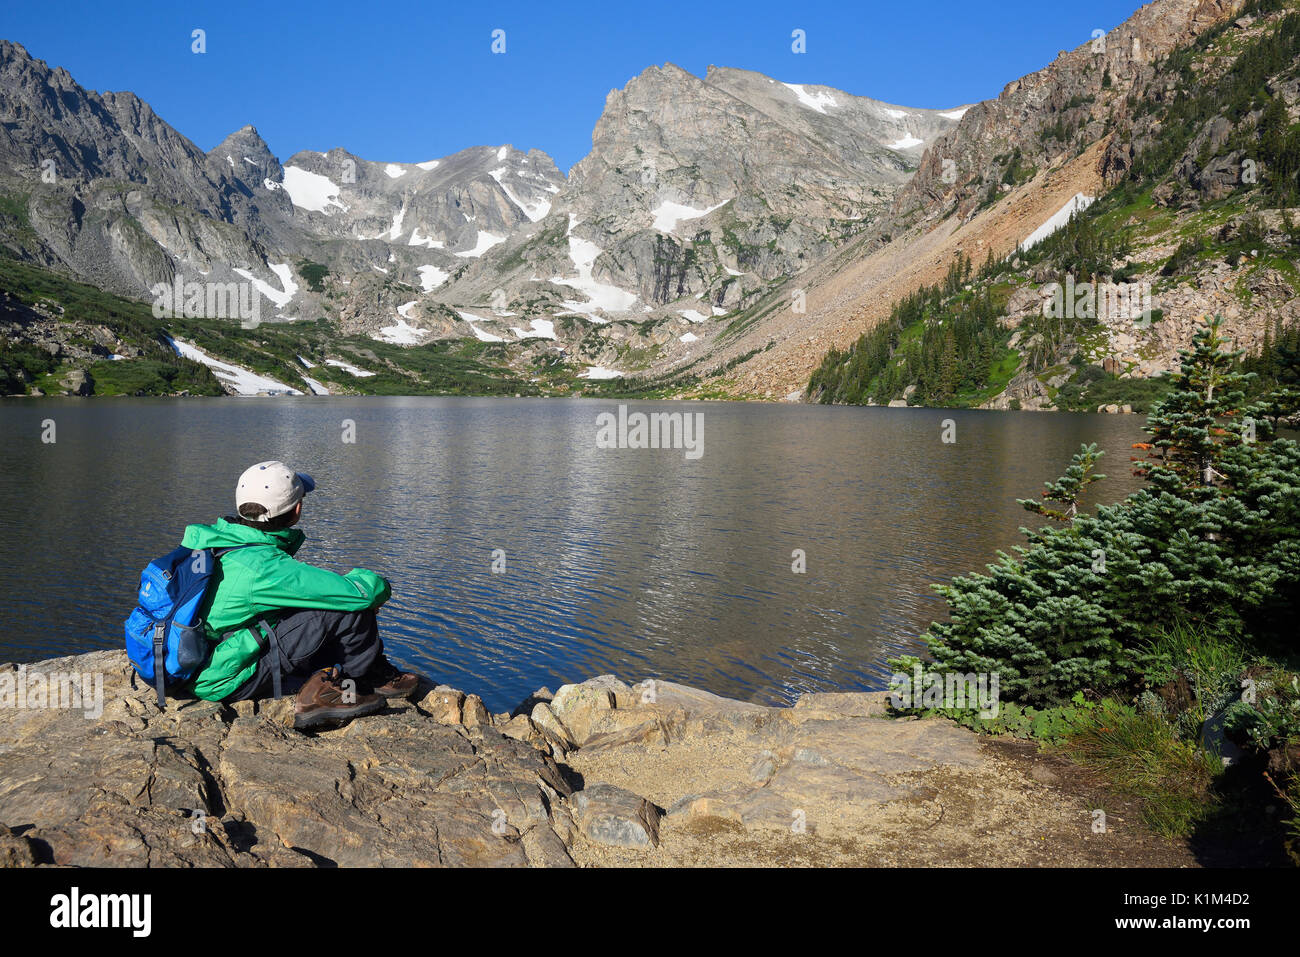 Lake Isabelle, Indian Peaks Wilderness, Roosevelt National Forest, Colorado, USA Banque D'Images